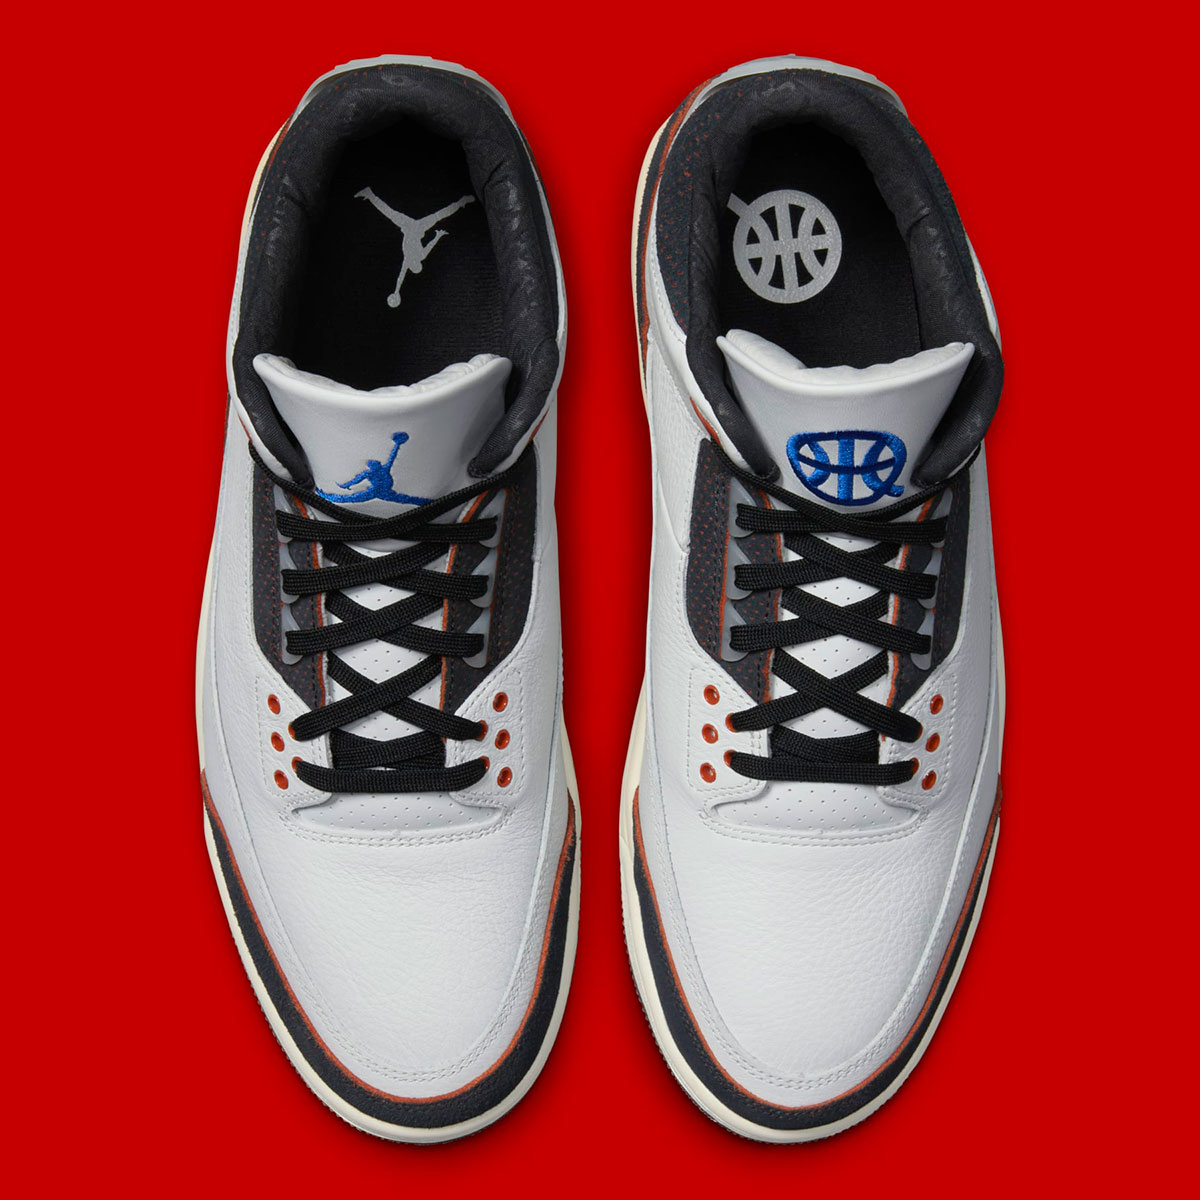 Air Jordan 3 Quai 54 Fz5649 100 Release Date 4